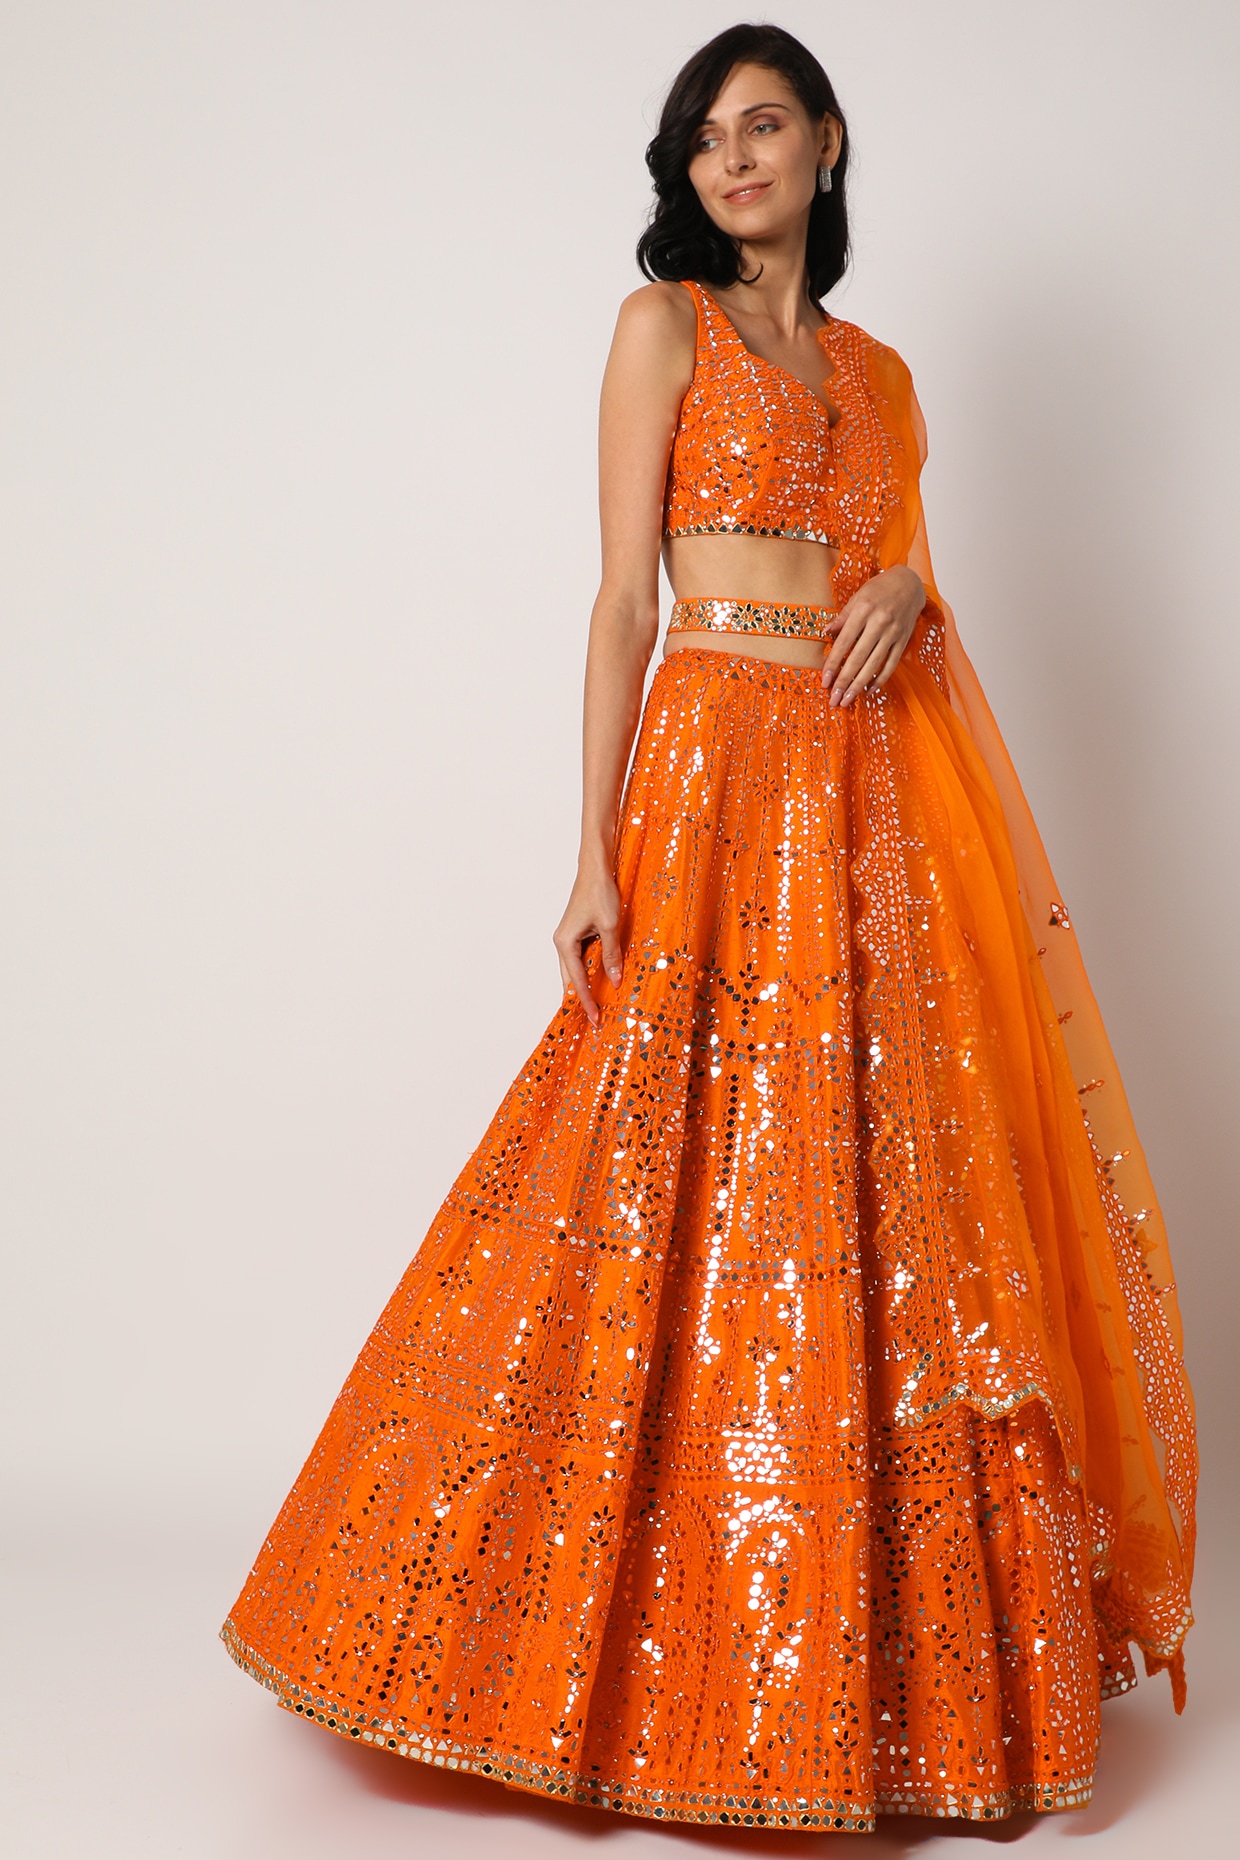 Festive/ Party/ Sangeet/ Wedding Thread Work Gown In Pink, 40% OFF